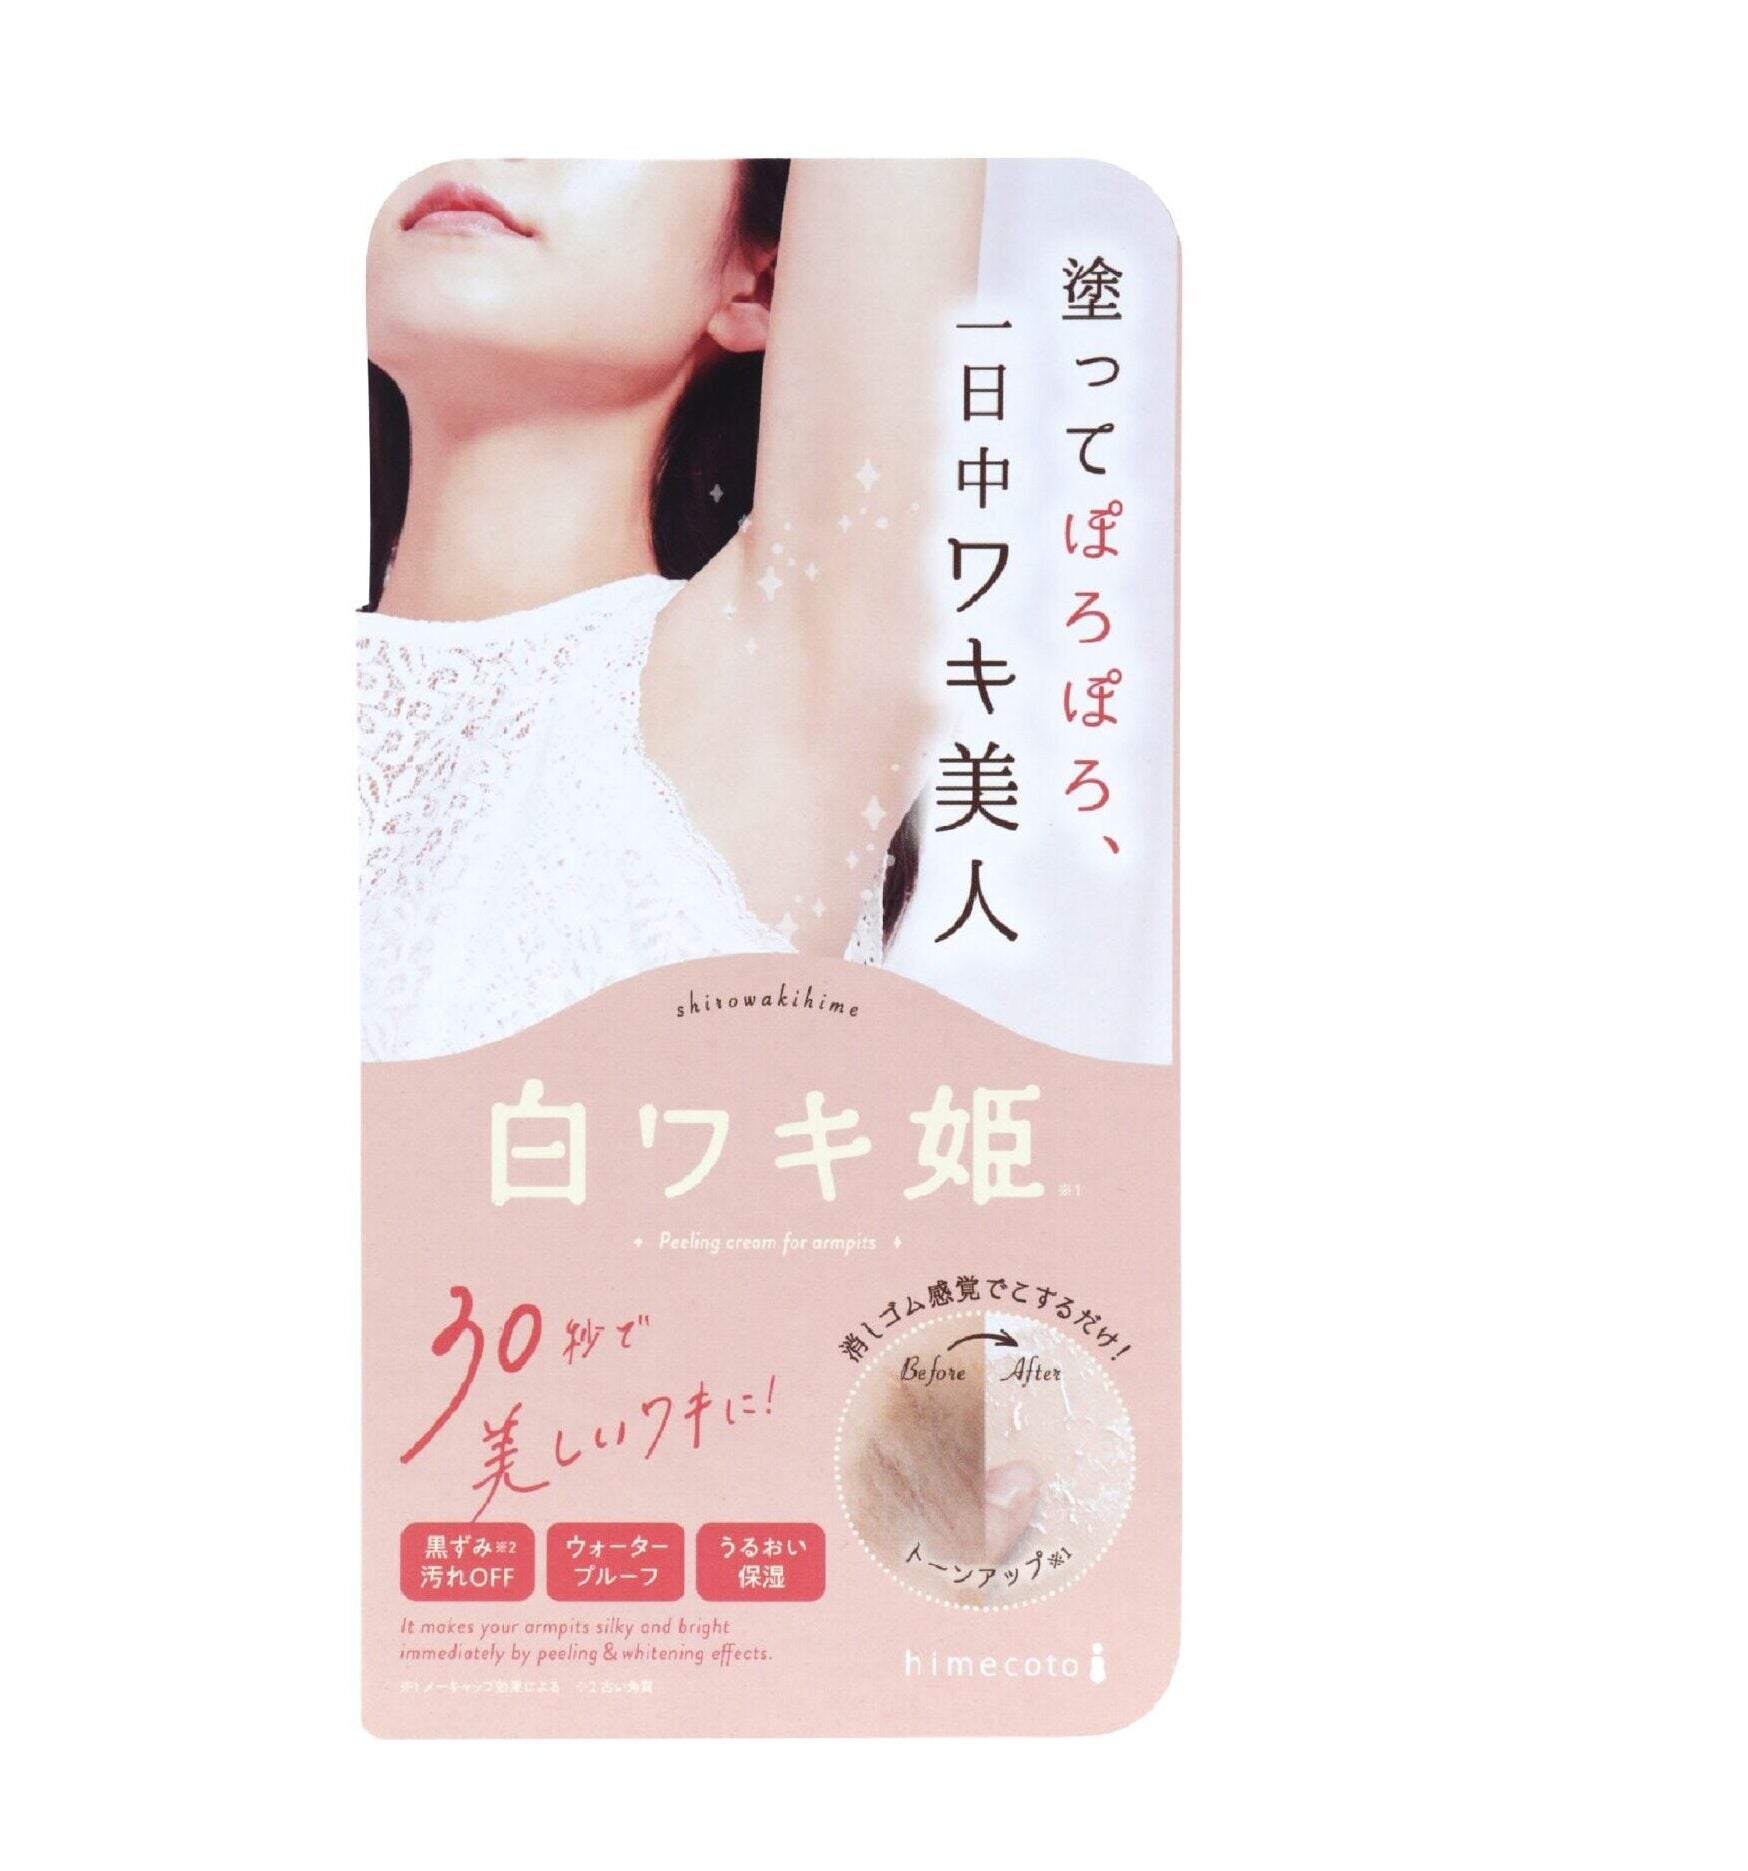 Liberta Himecoto Shiro Waki Hime Underarms Exfoliating & Brightening Cream